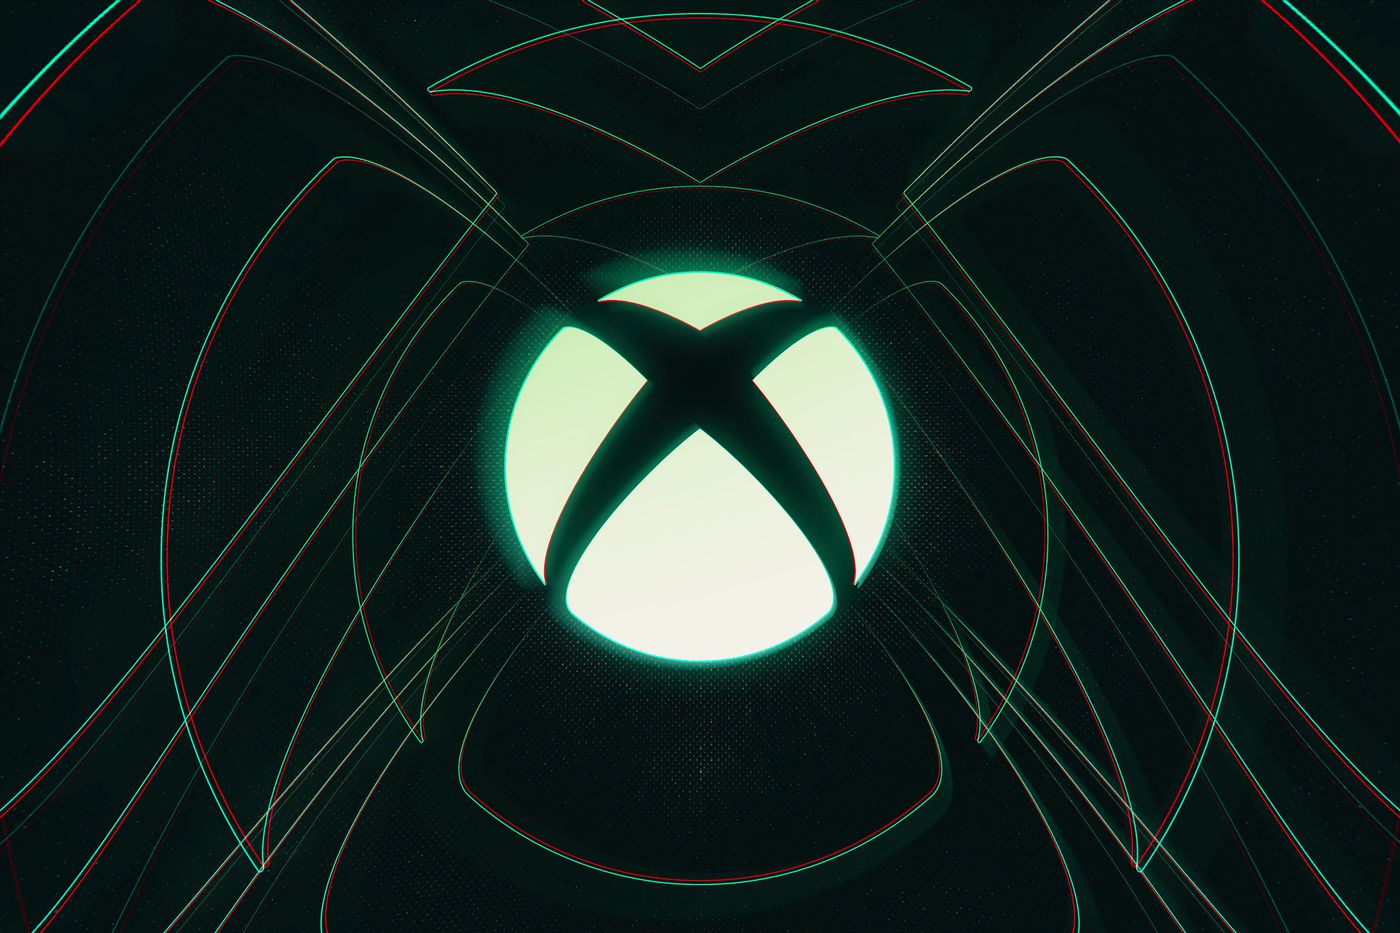 Xbox is looking to buy new studios